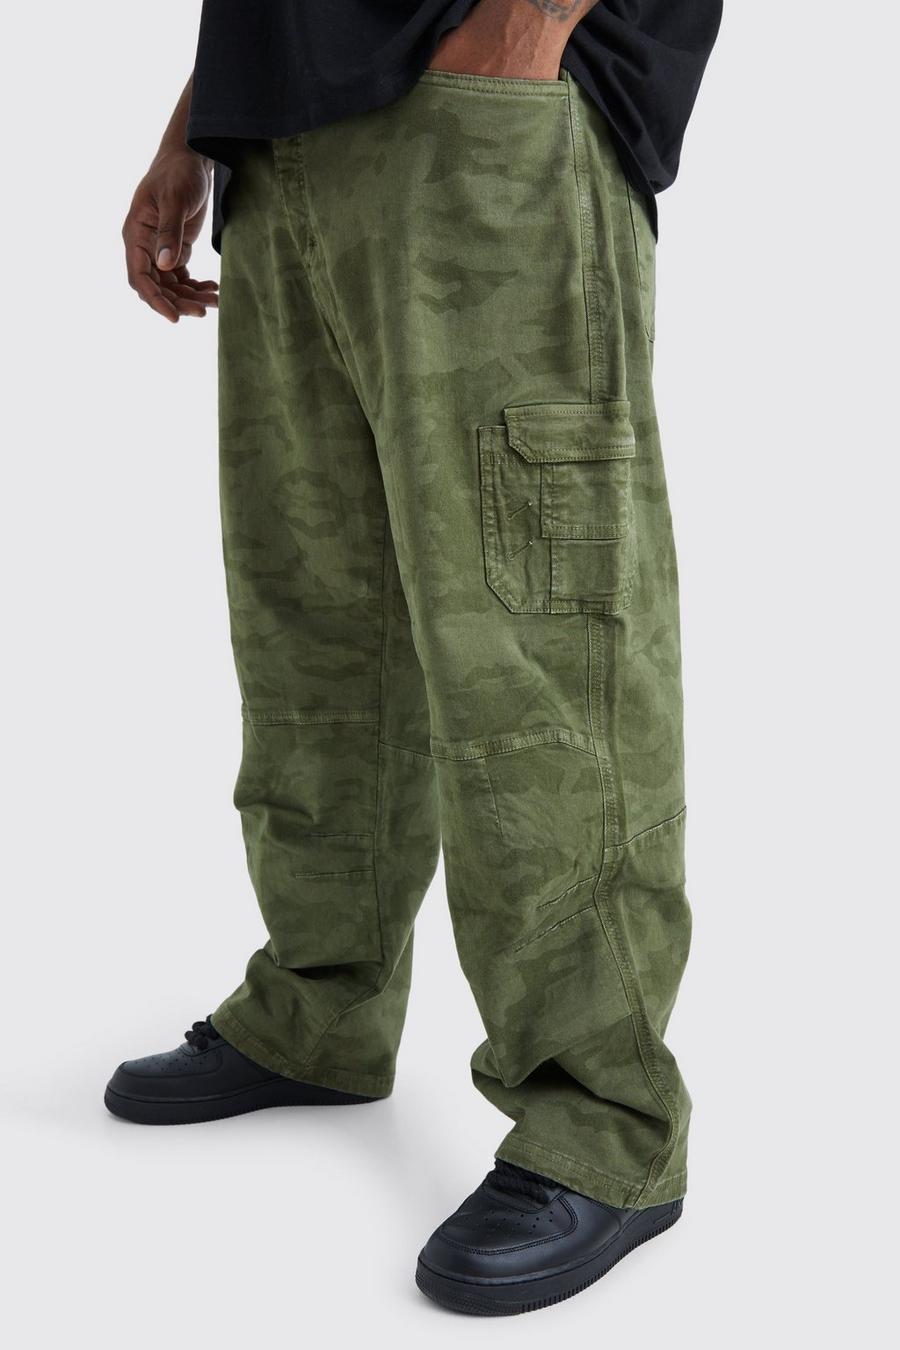 Pantaloni Cargo Plus Size rilassati in fantasia militare stile Carpenter, Khaki